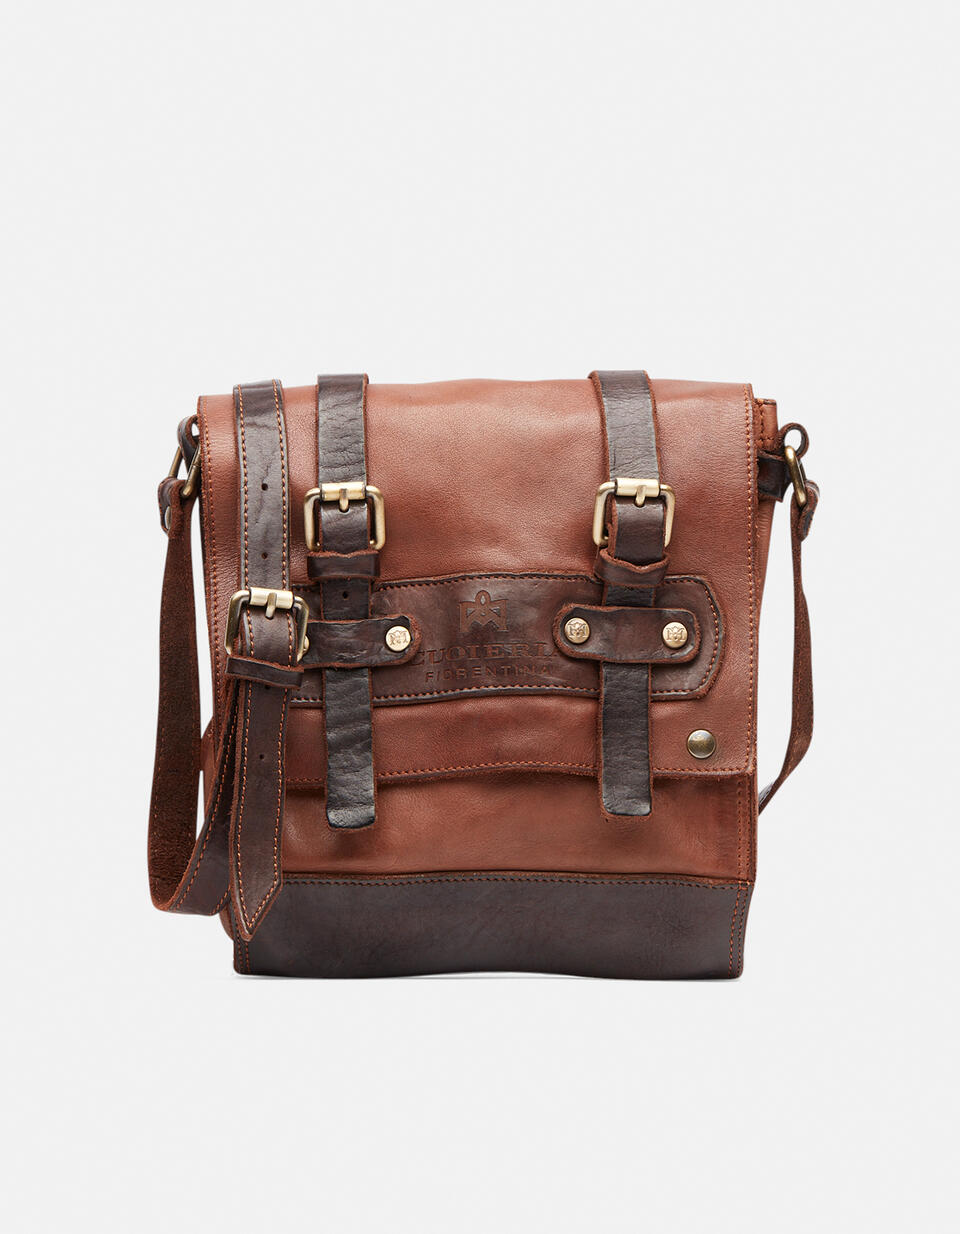 Millennial bag in natural leather - Crossbody Bags - MEN'S BAGS | bags BRUCIATO - Crossbody Bags - MEN'S BAGS | bagsCuoieria Fiorentina